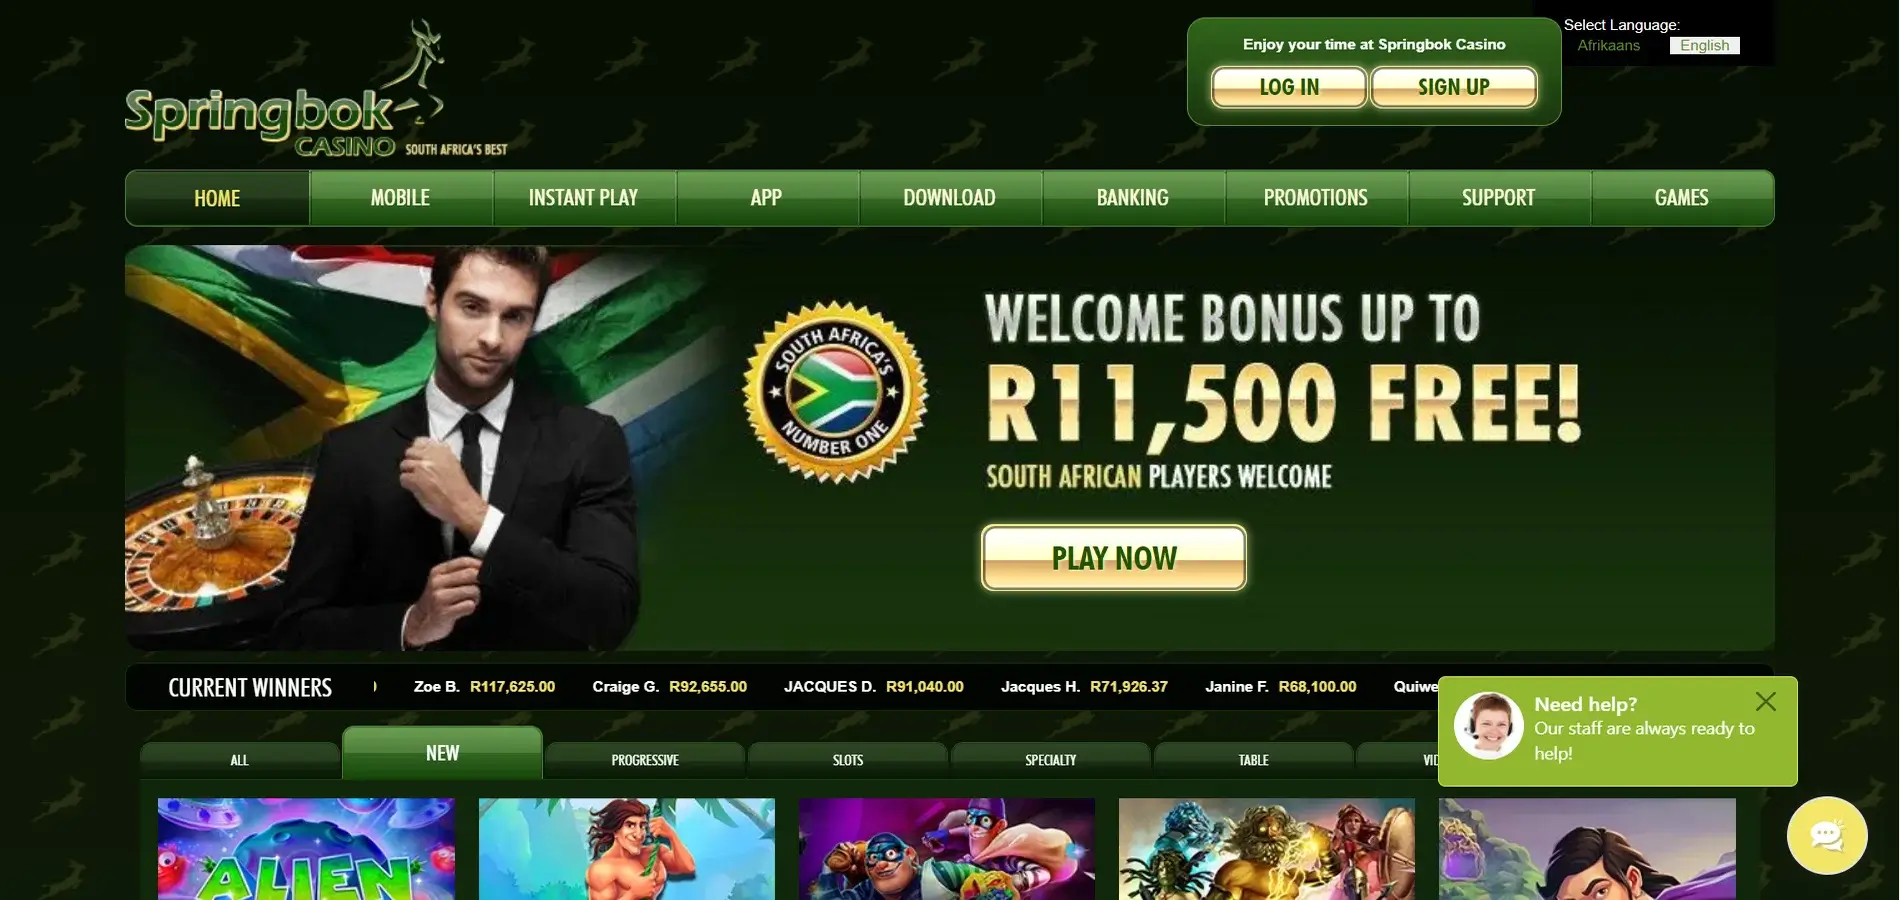 Springbok online casino login process